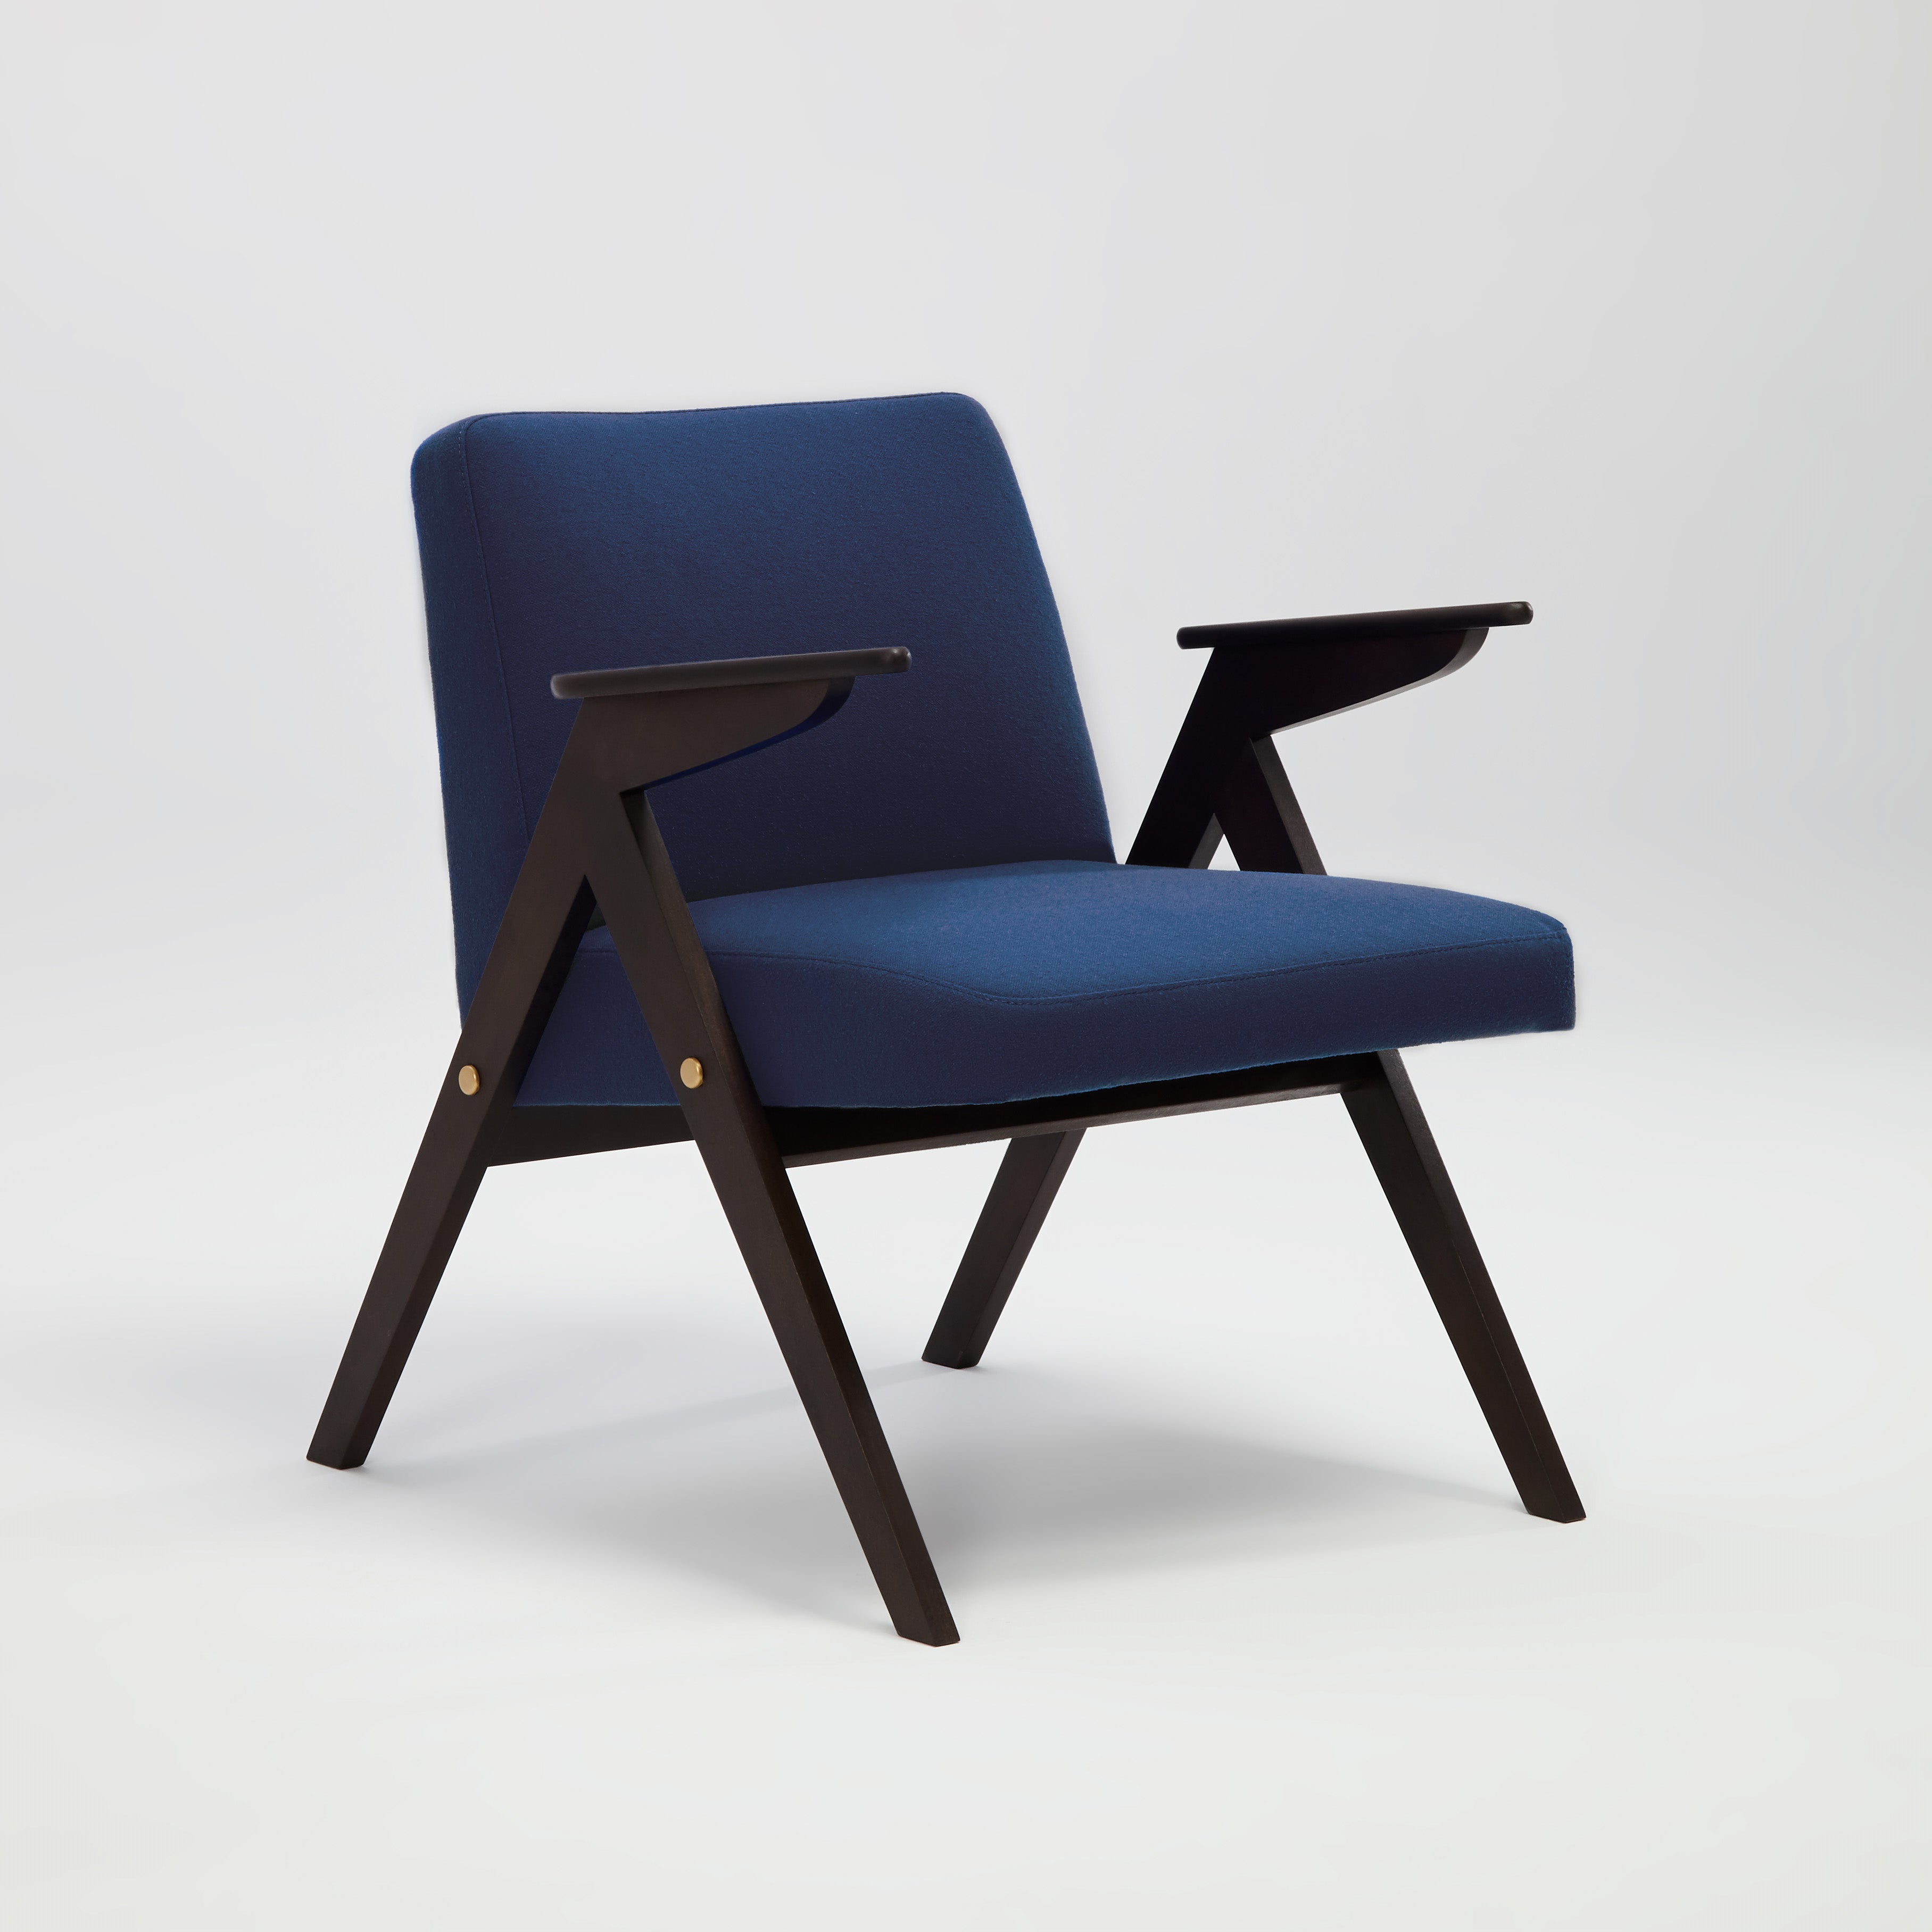 JUNCO Chair black beech wood upholstery colour blue